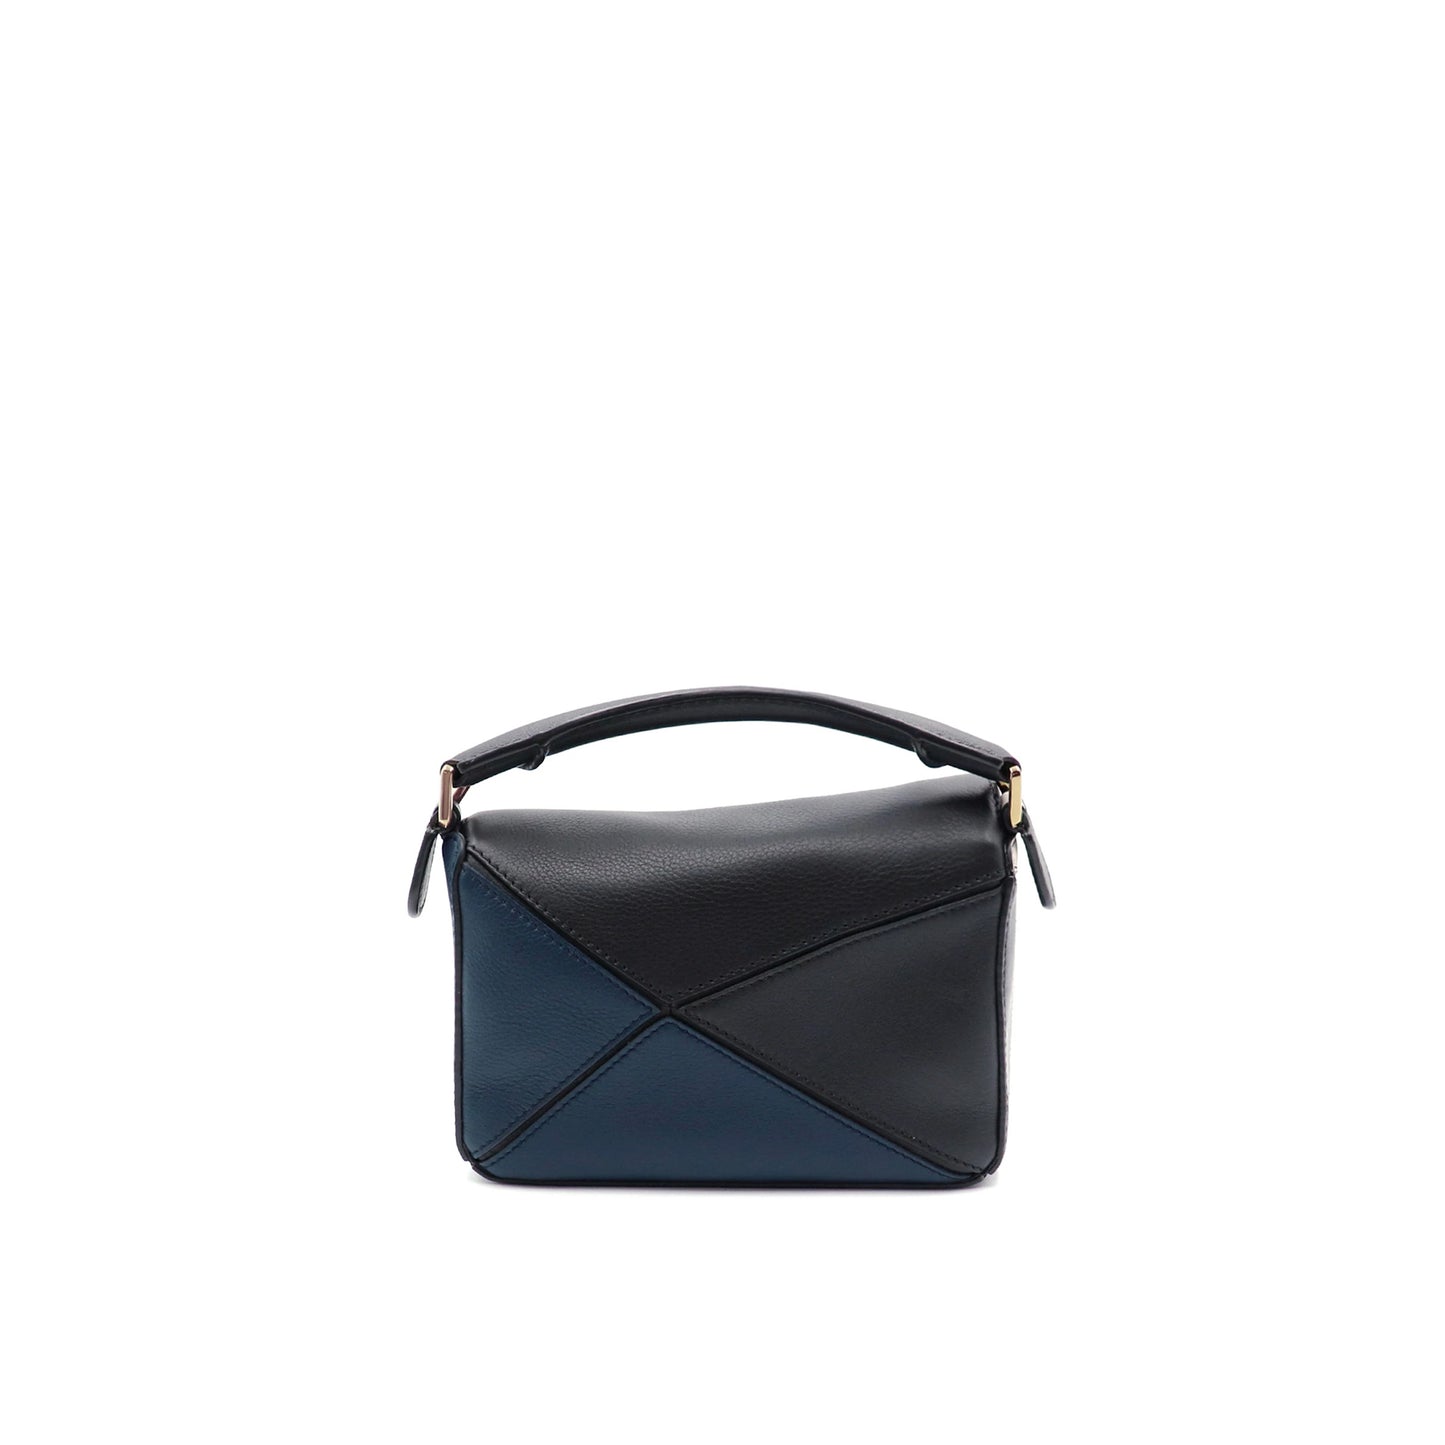 Mini Puzzle Bag in Classic Calfskin in Black/Angora